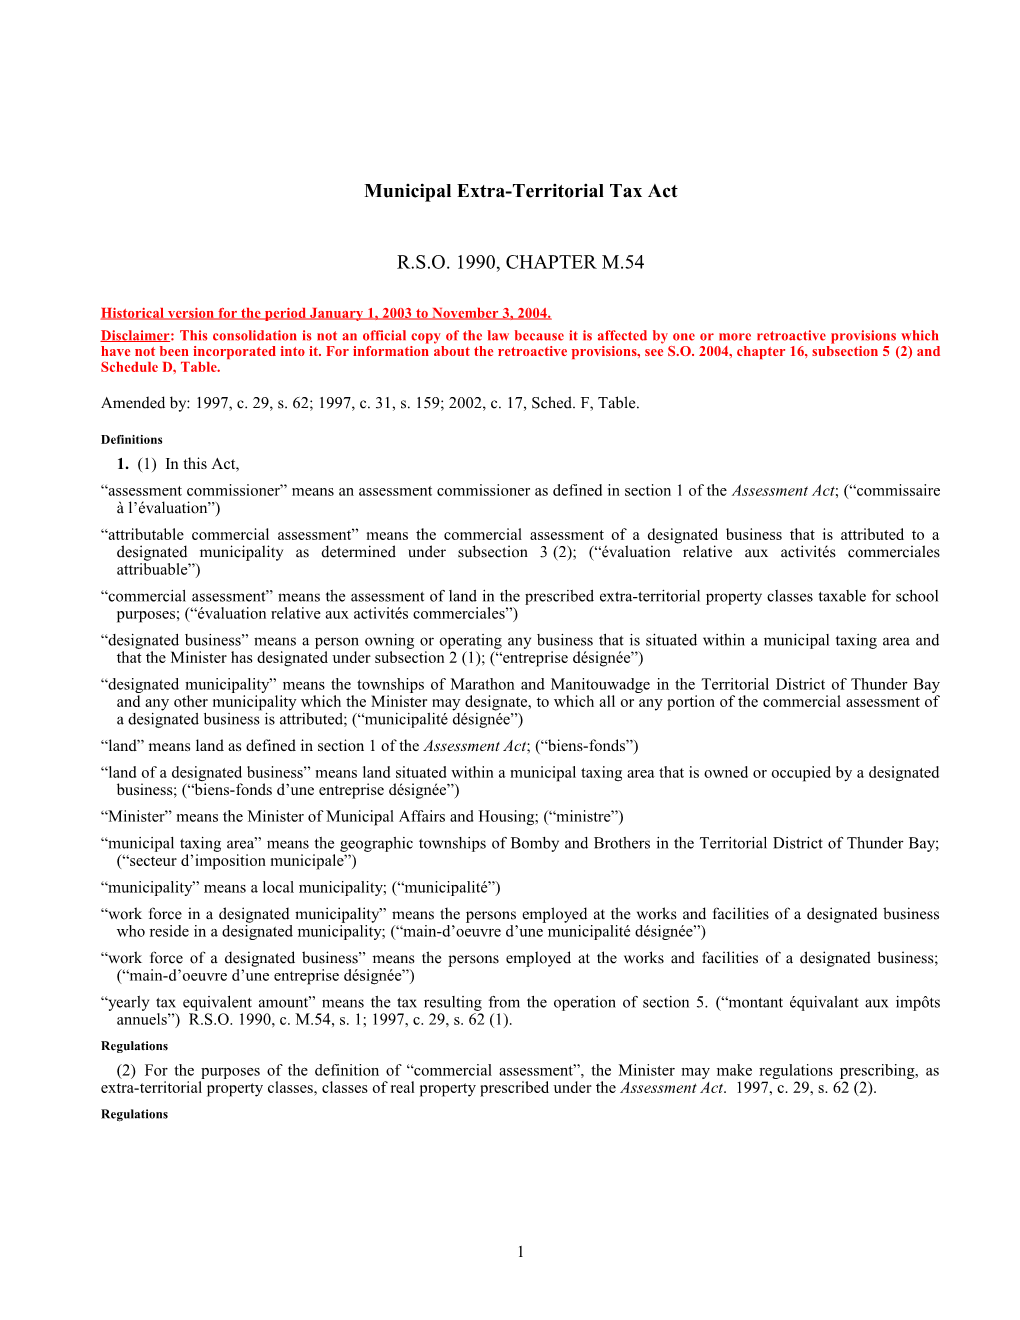 Municipal Extra-Territorial Tax Act, R.S.O. 1990, C. M.54